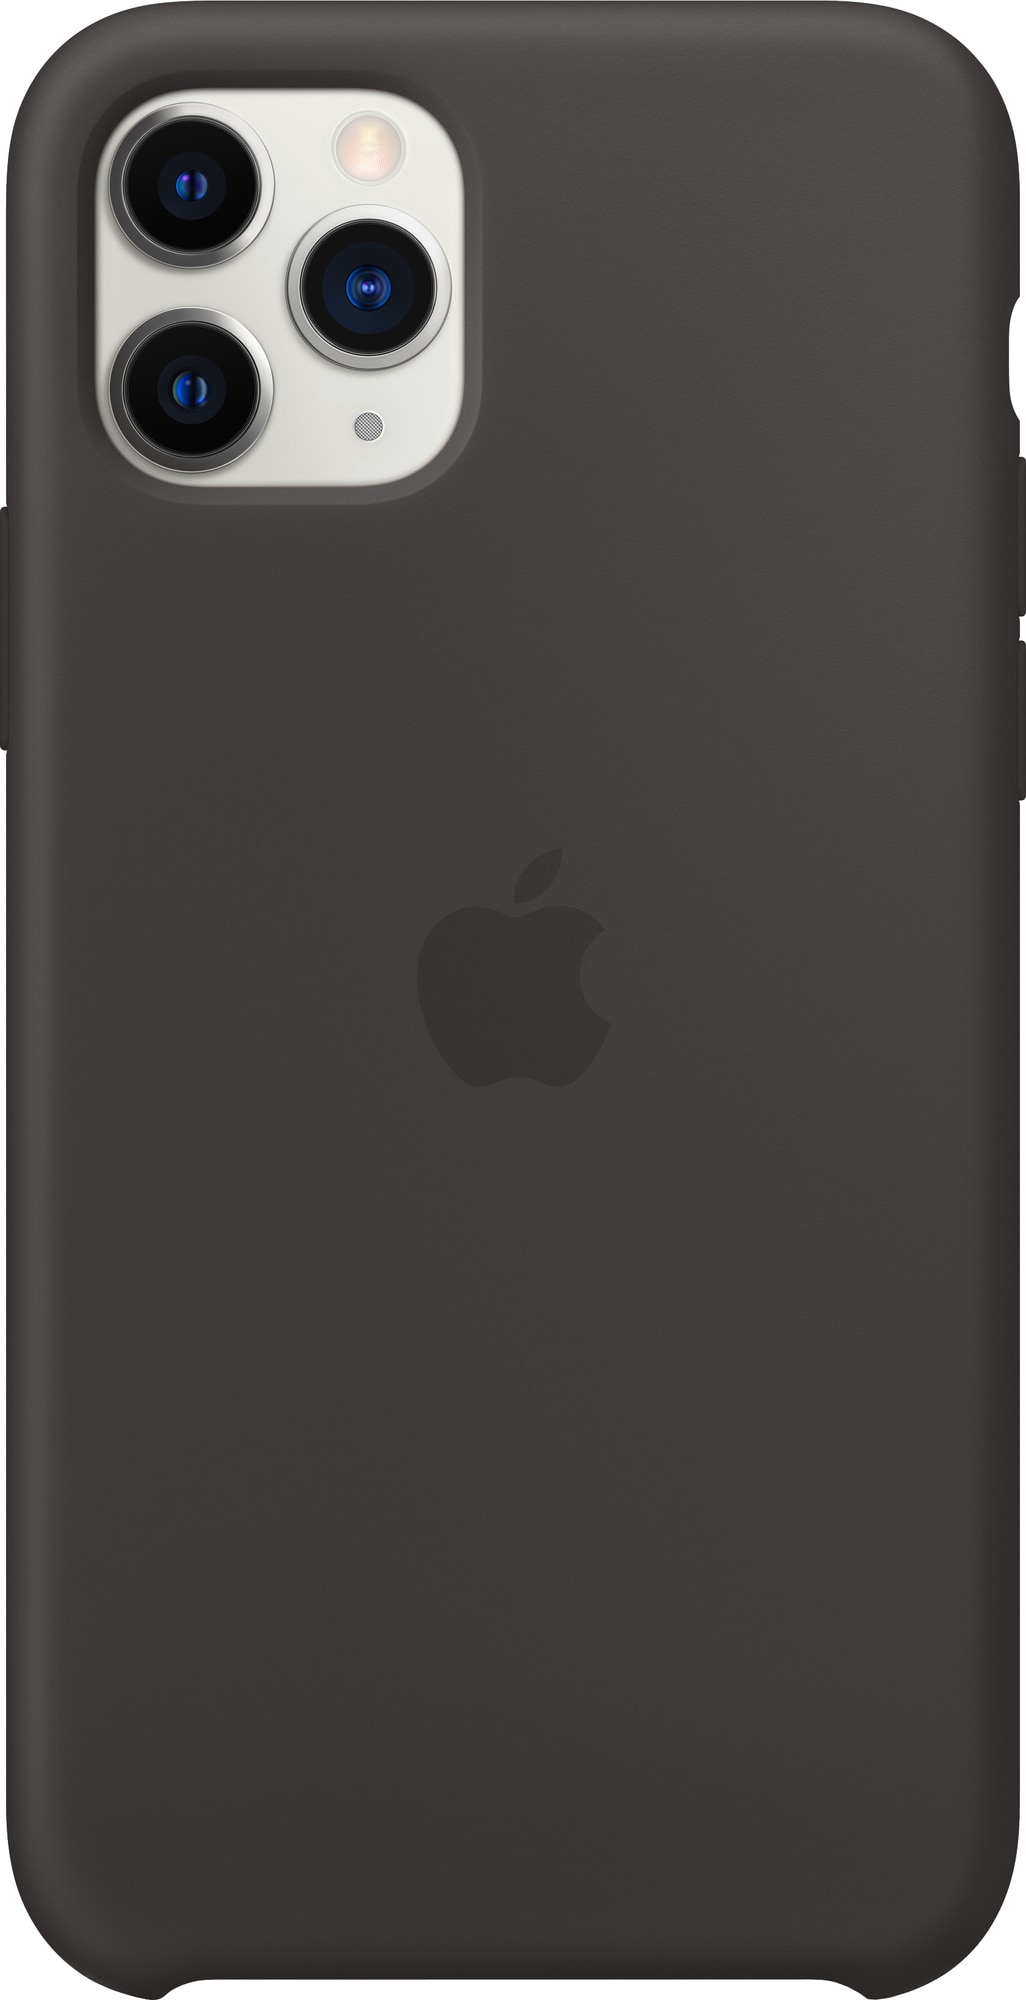 iPhone 11 Pro silikonecover (black) | Elgiganten